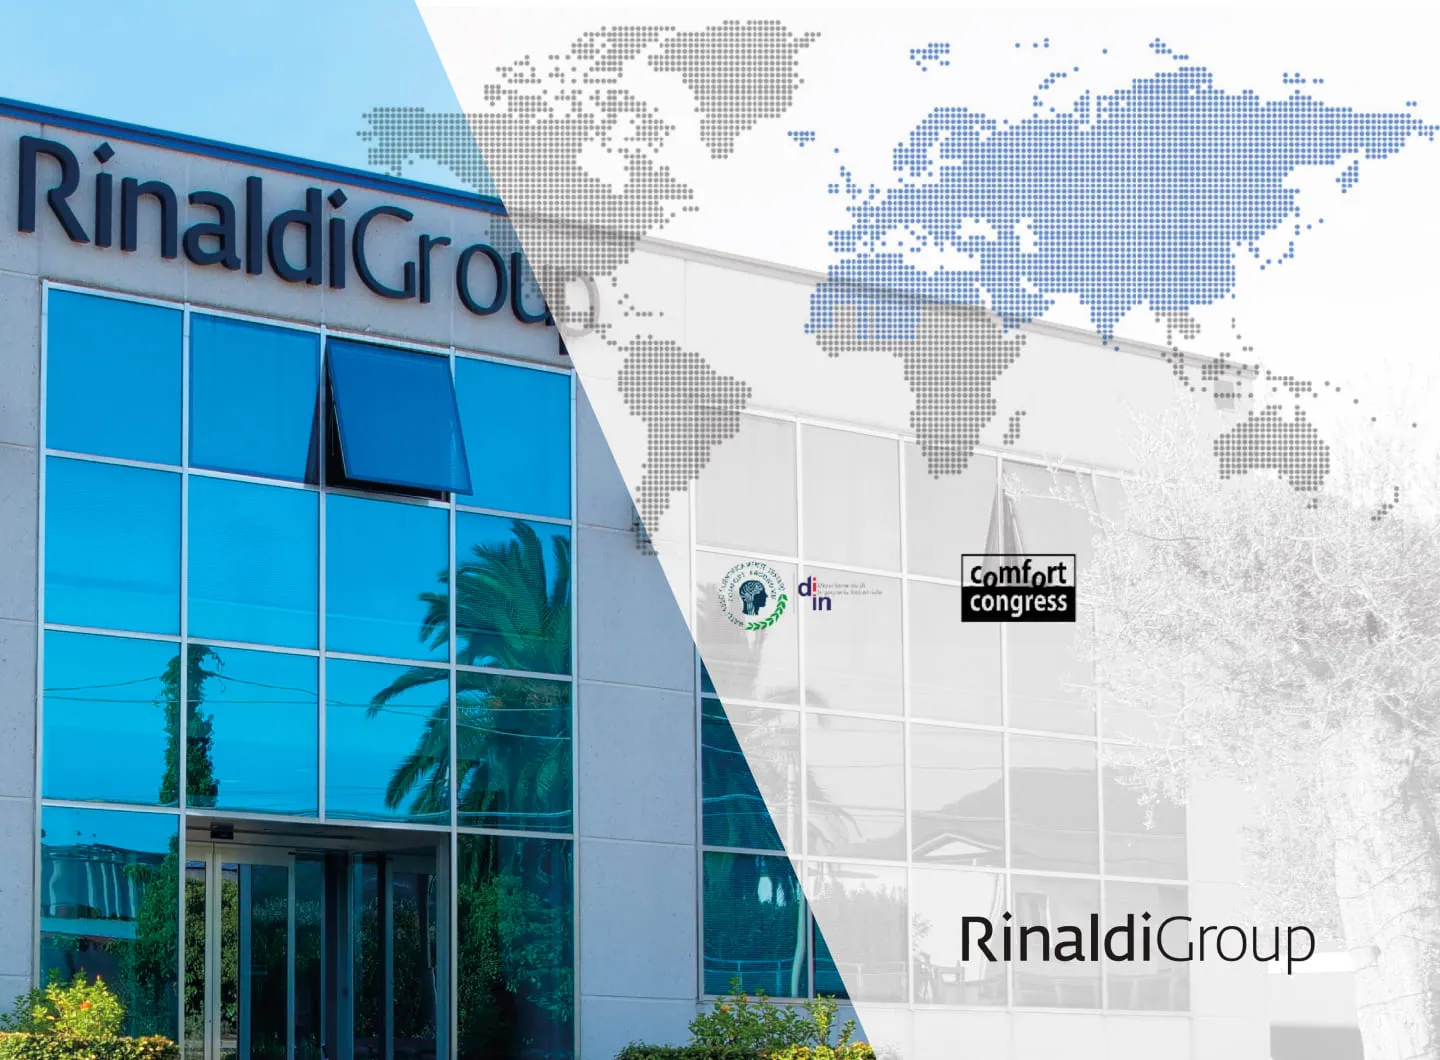 Rinaldi Group - More innovation, more internationalization, more sustainability